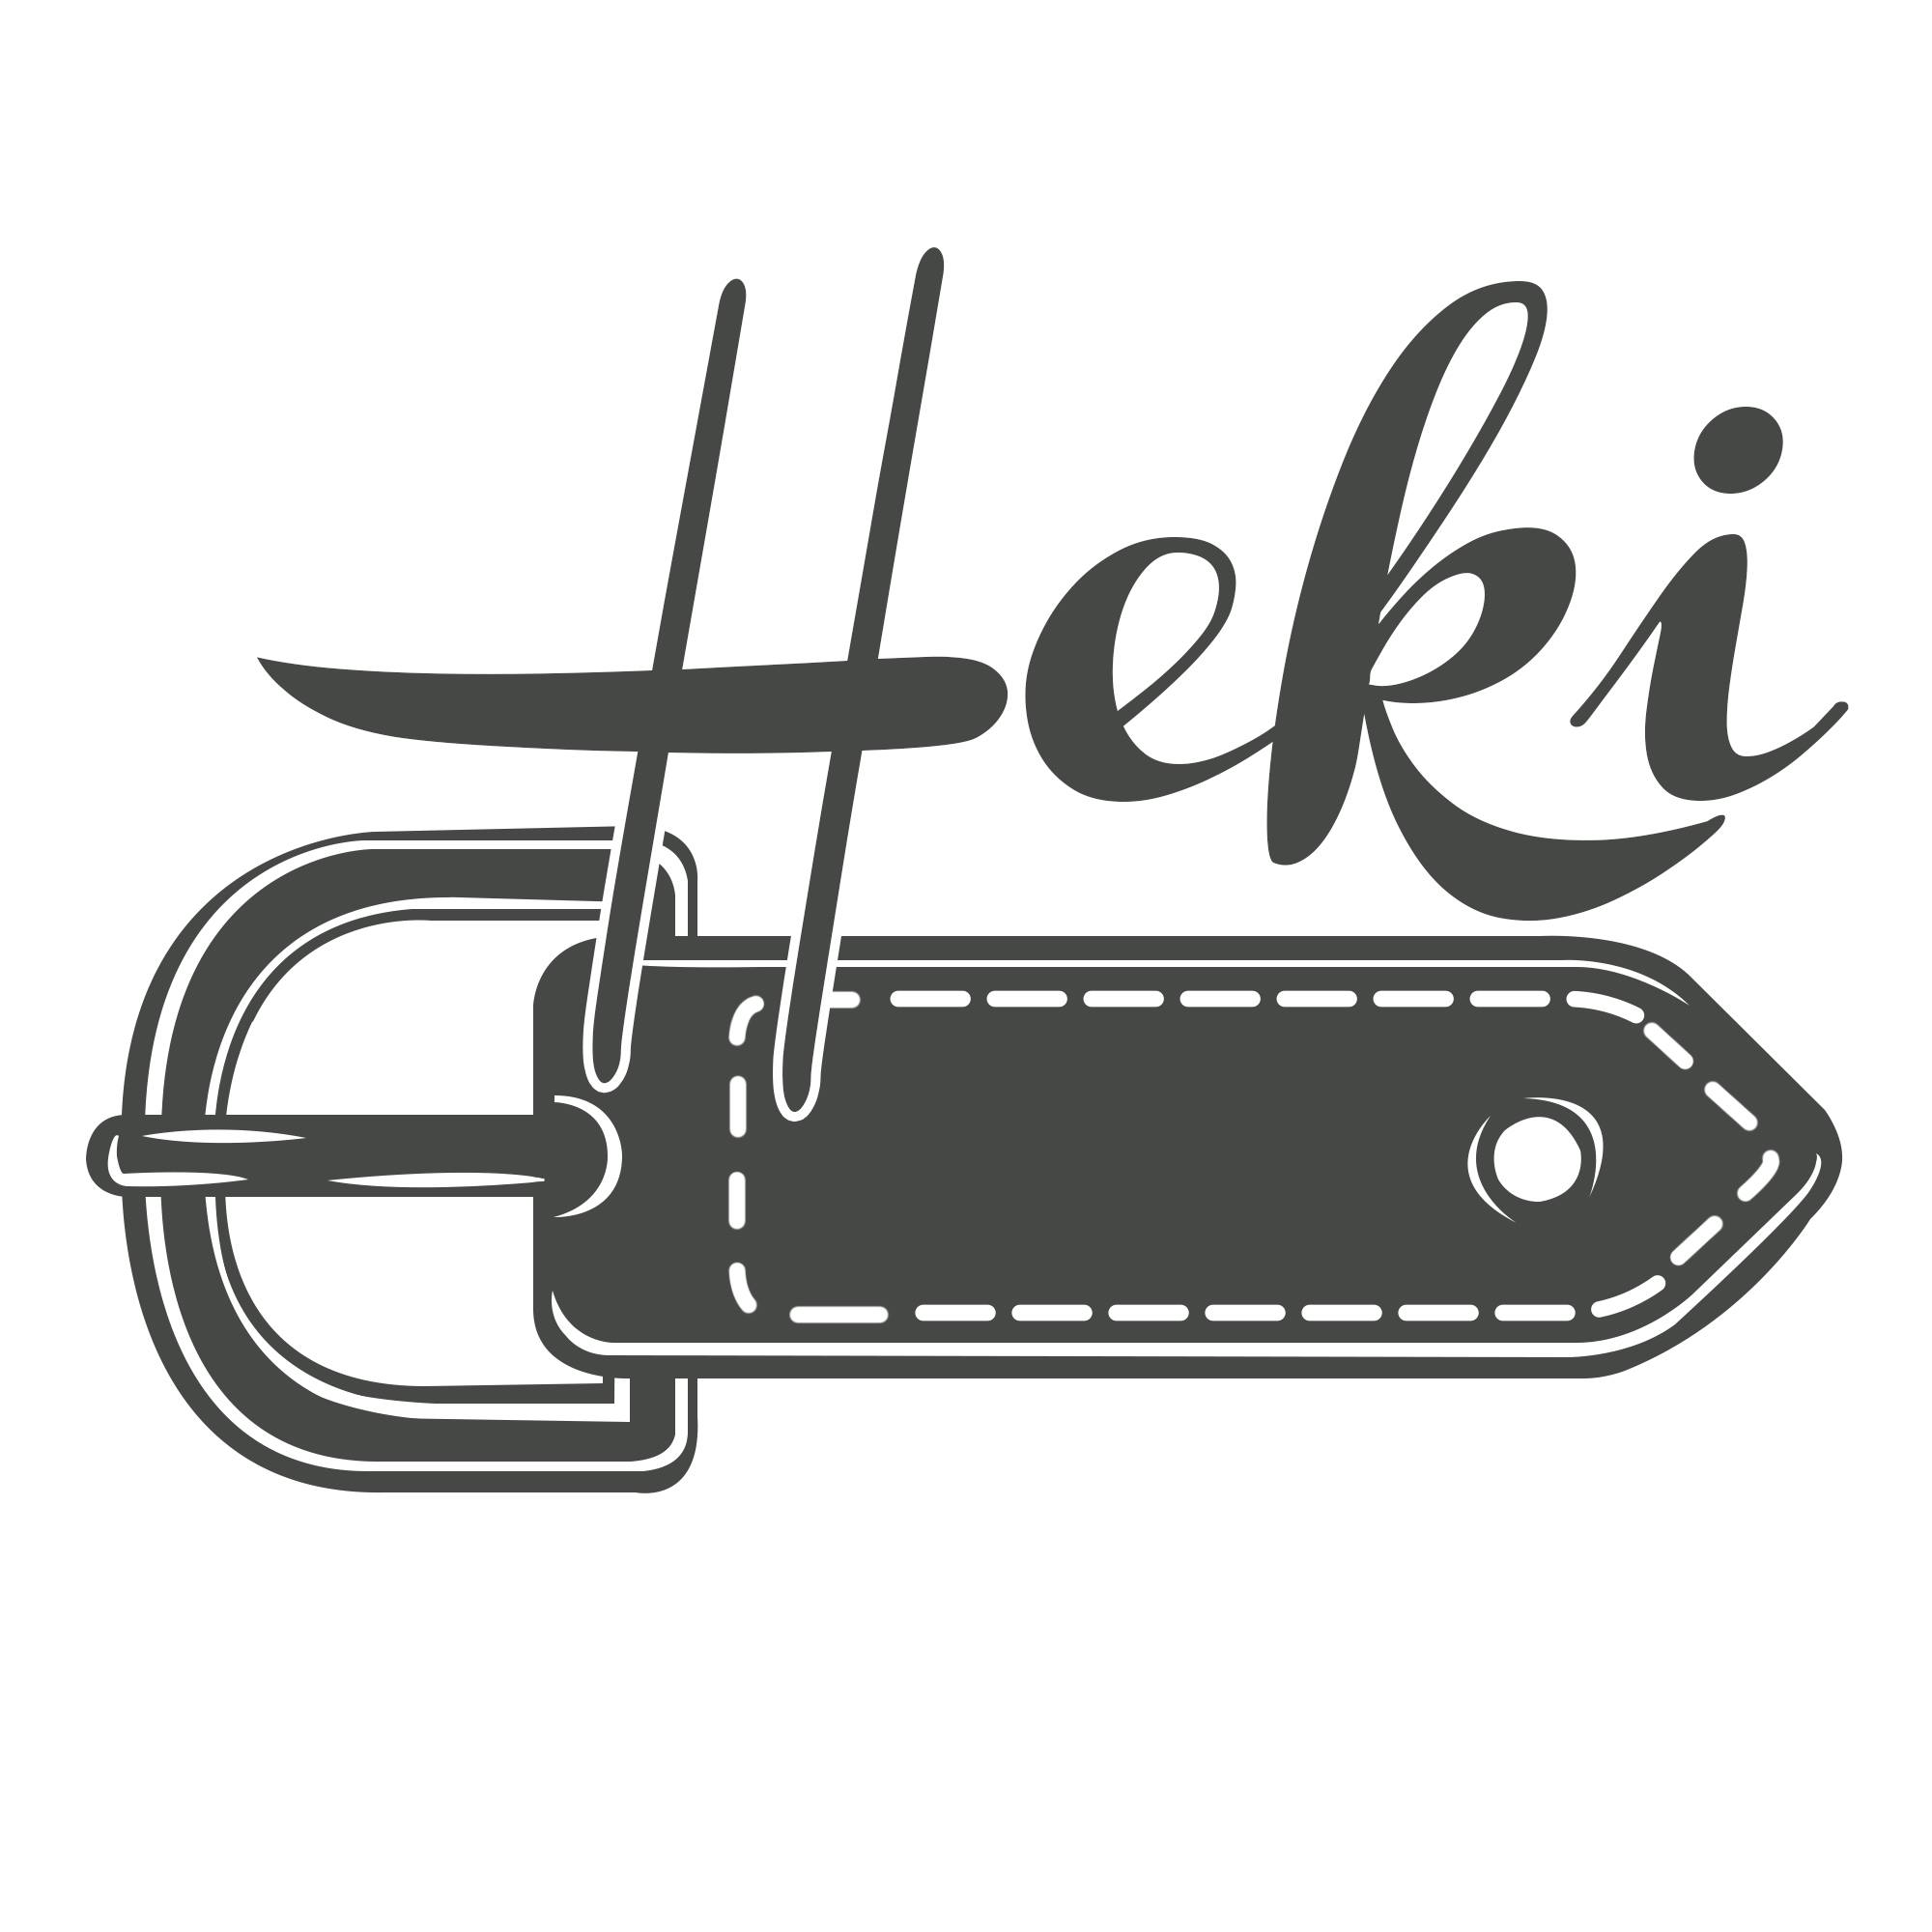 Heki Shop